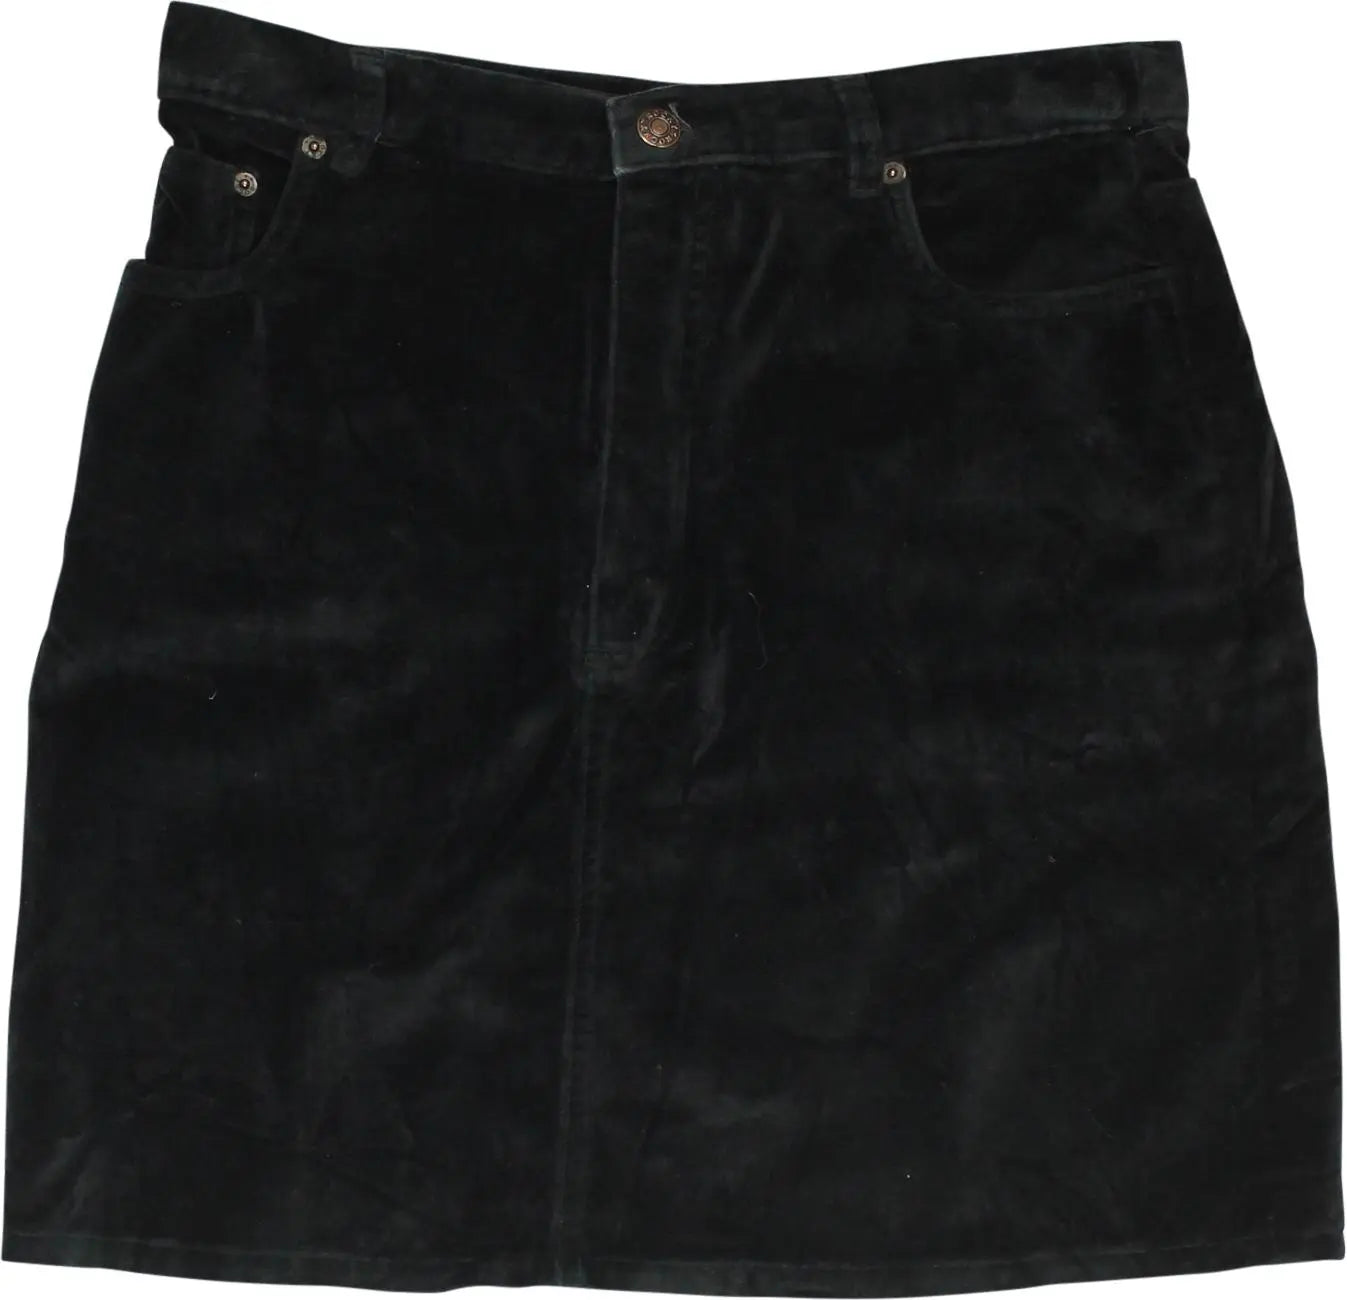 Rocky - Black velvet skirt- ThriftTale.com - Vintage and second handclothing